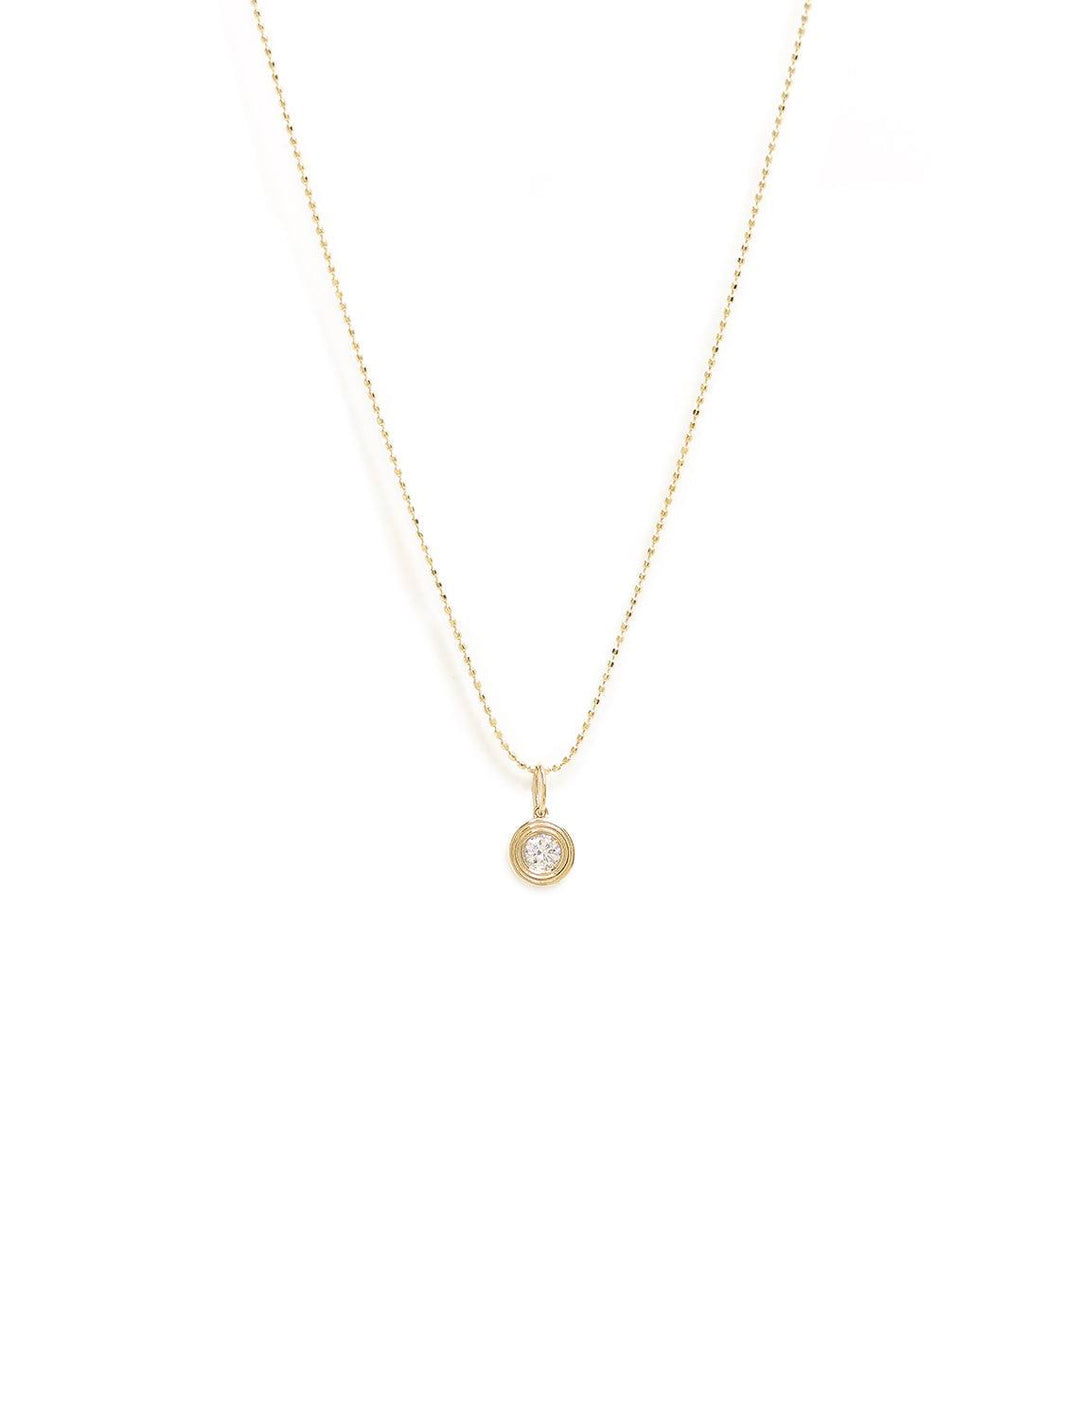 Sydney Evan's Fluted Single Diamond Necklace on 16" Bolita Chain.